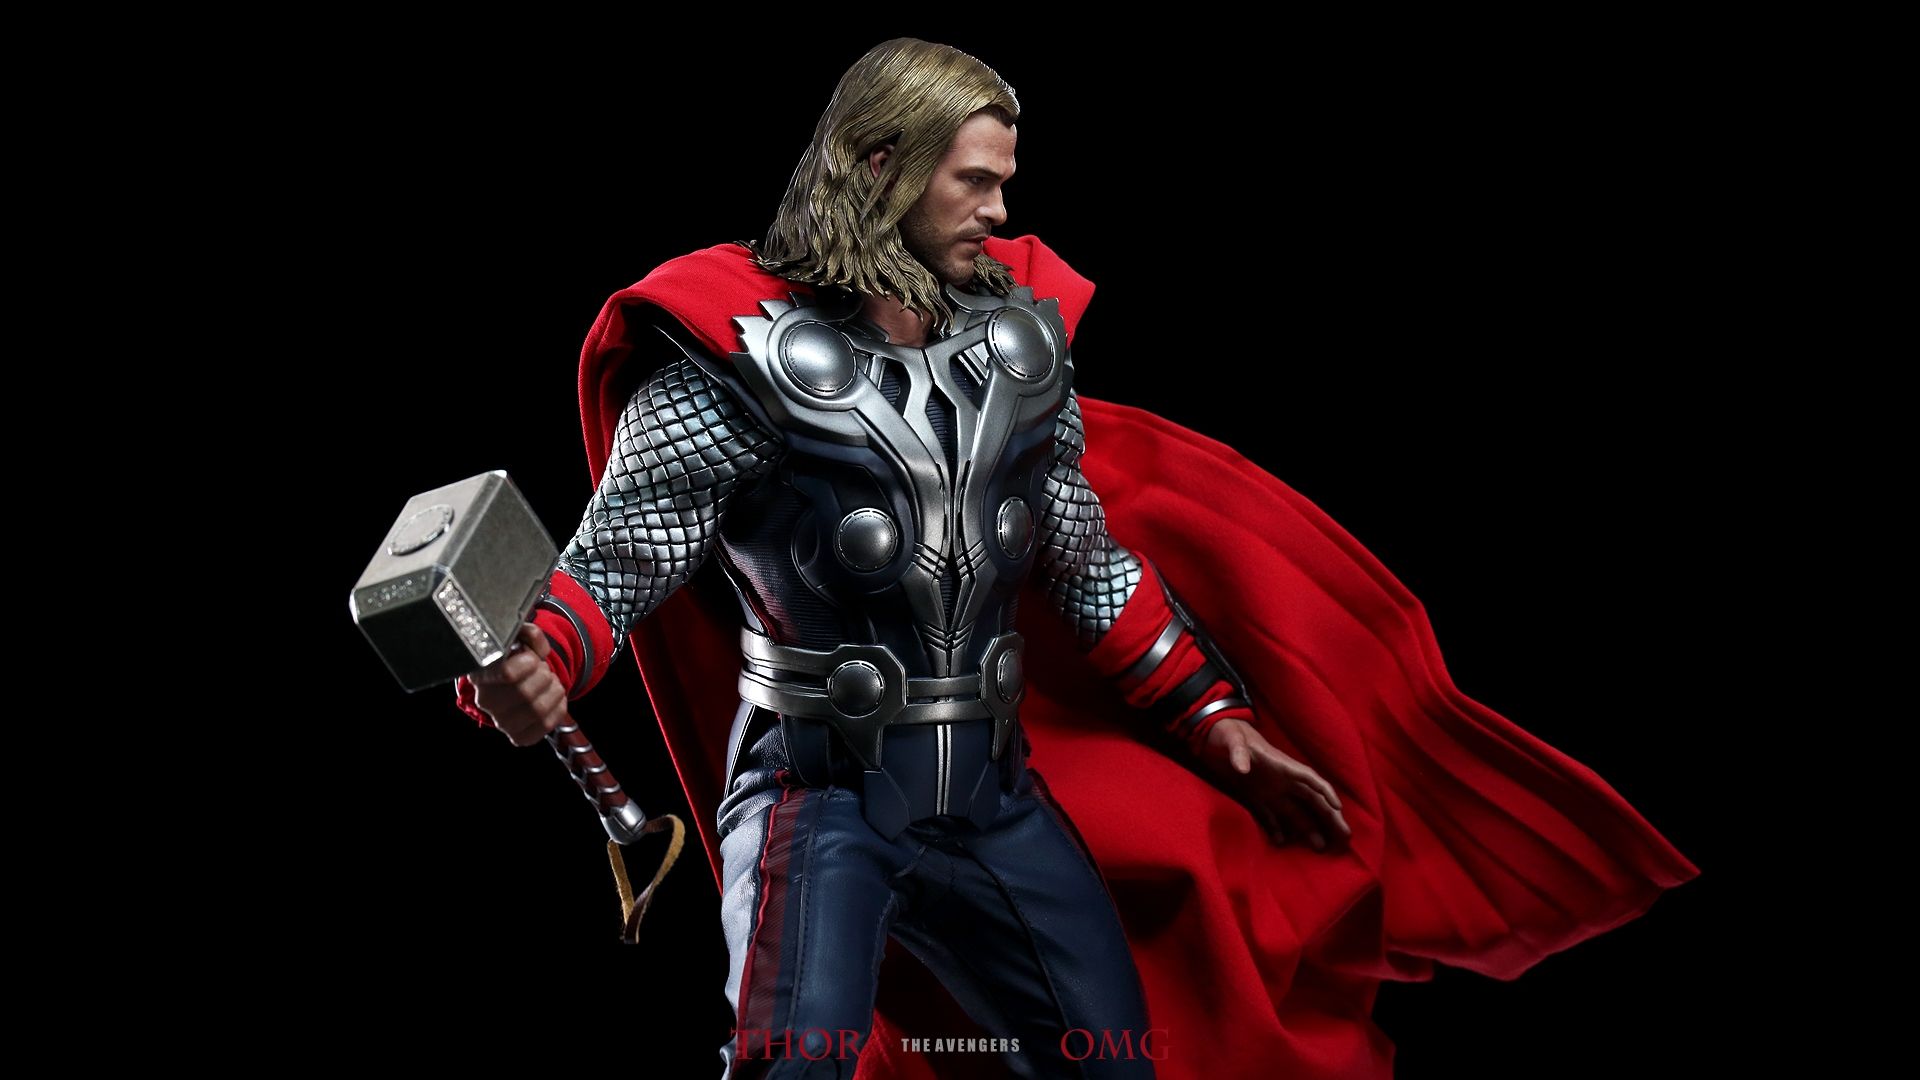 Thor 3D Wallpaper